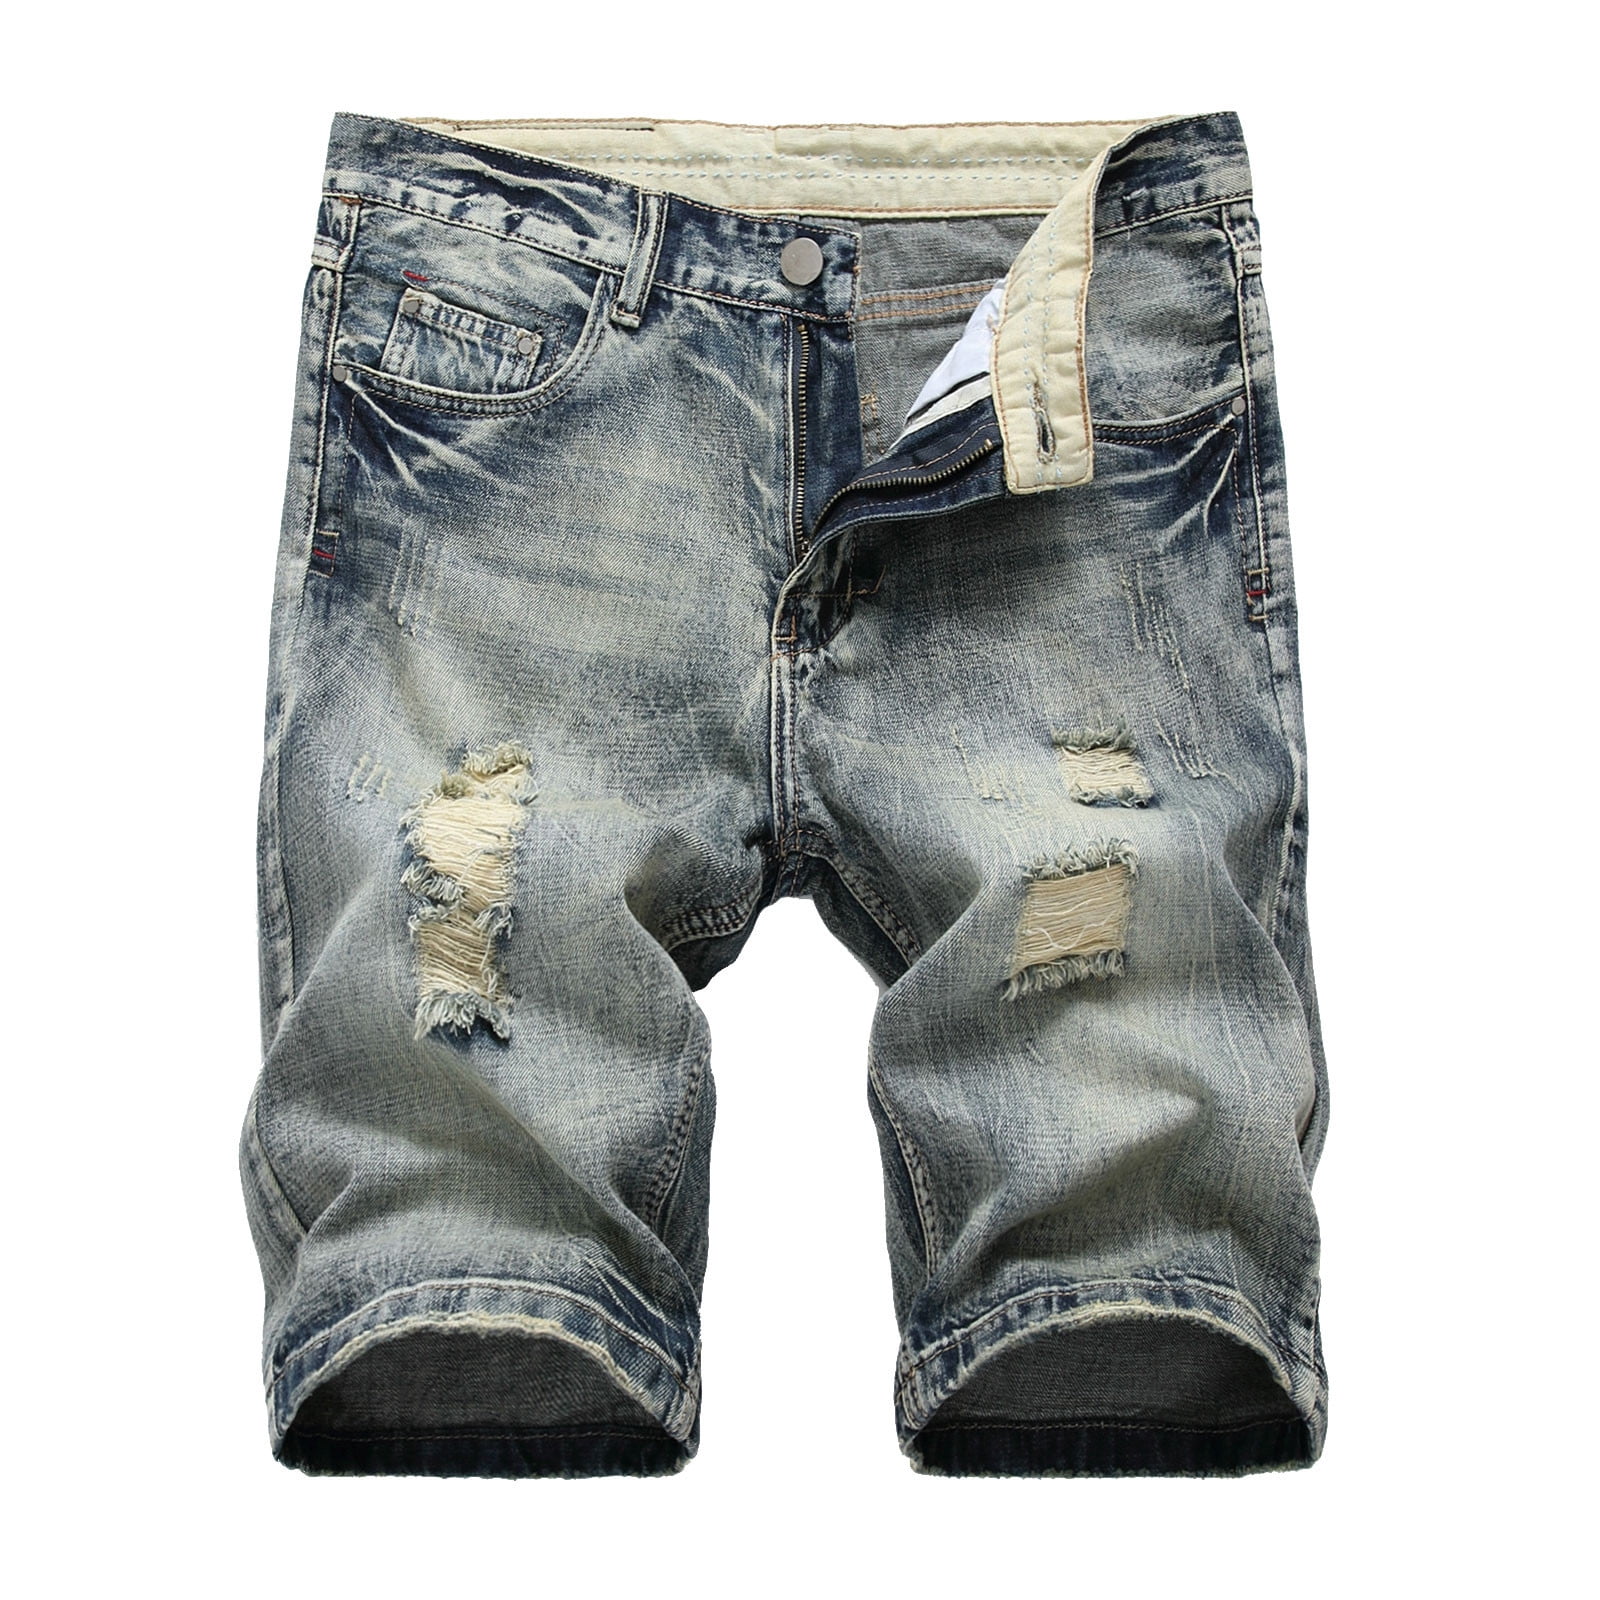 CaComMARK PI Men's Shorts Clearance Men's Stretchy Washed Denim Jeans ...